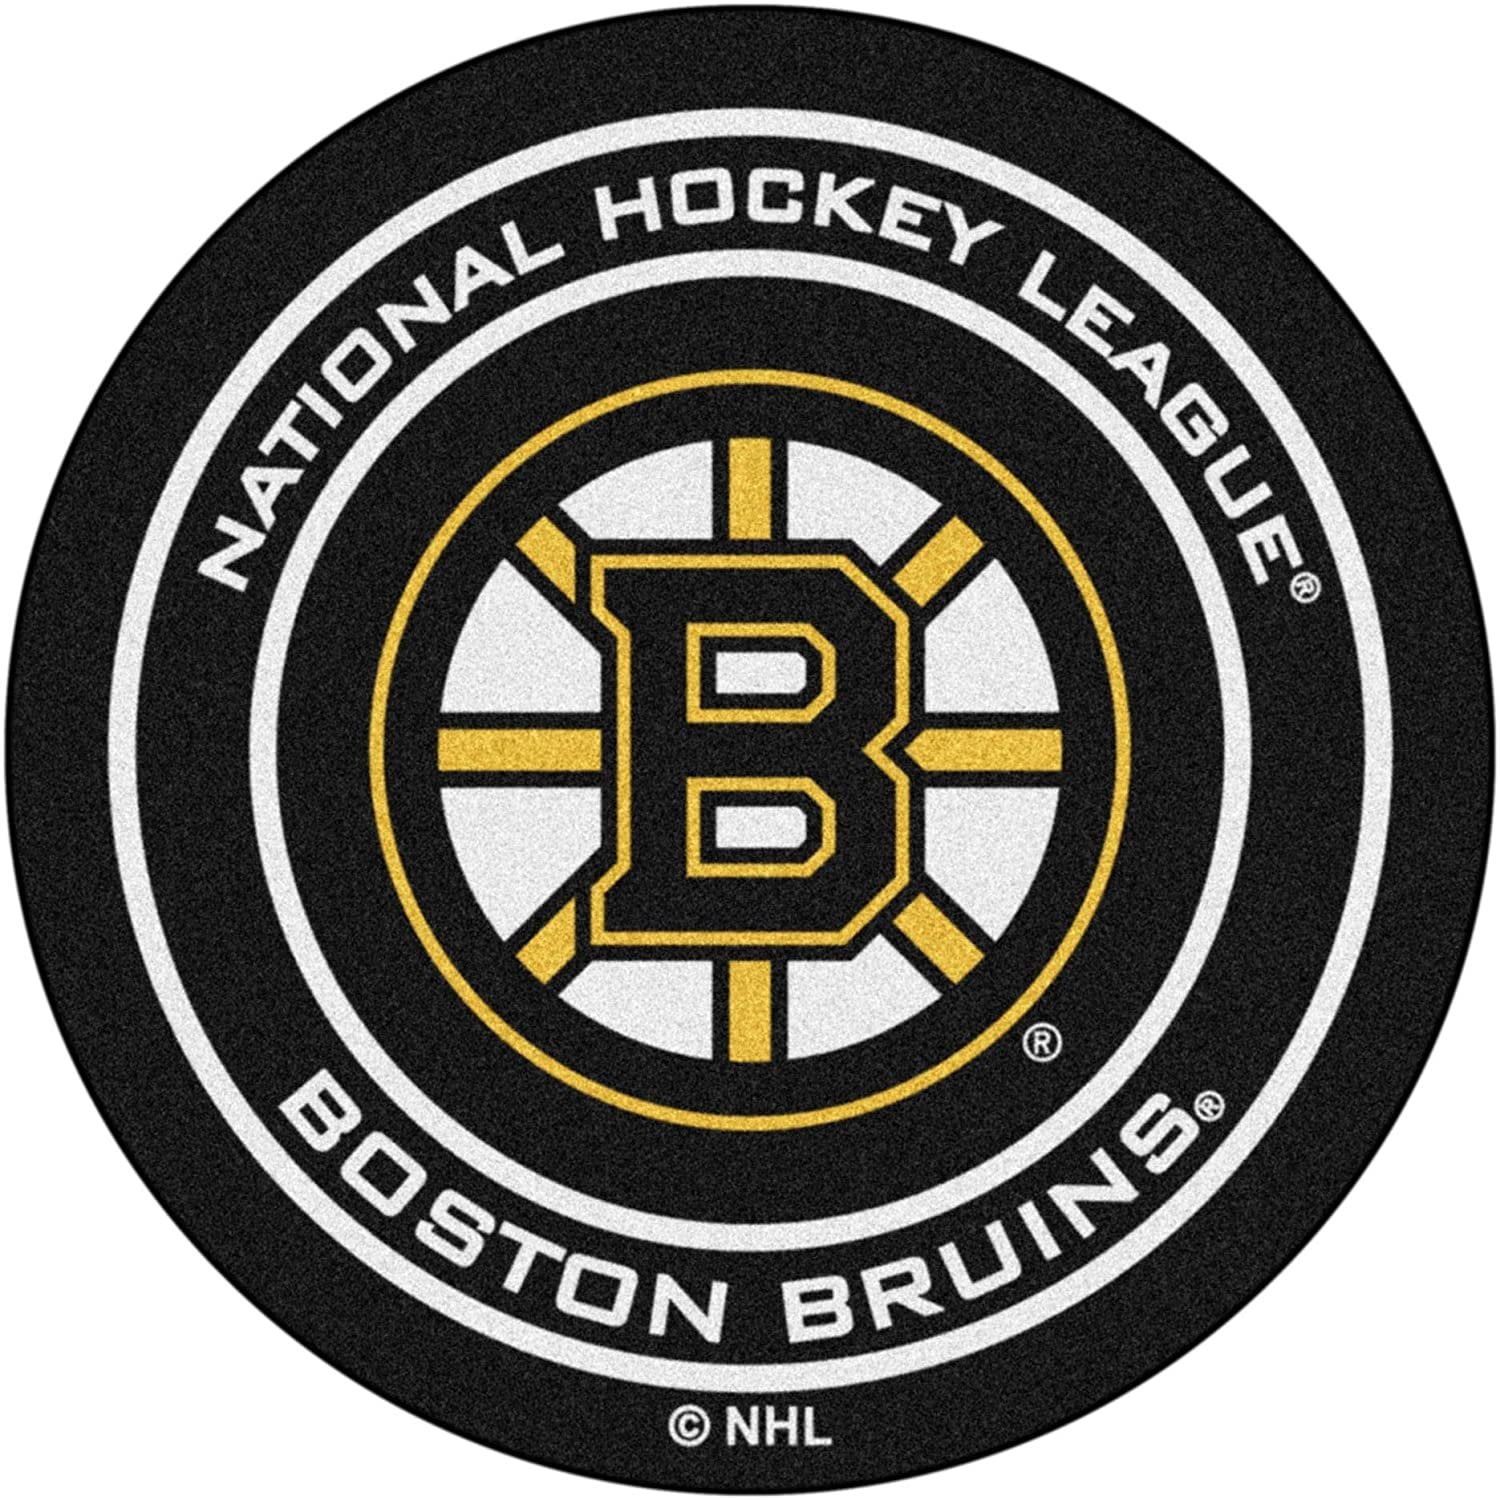 Boston Bruins 27 Inch Area Rug Floor Mat, Nylon, Anti-Skid Backing, Puck Shaped